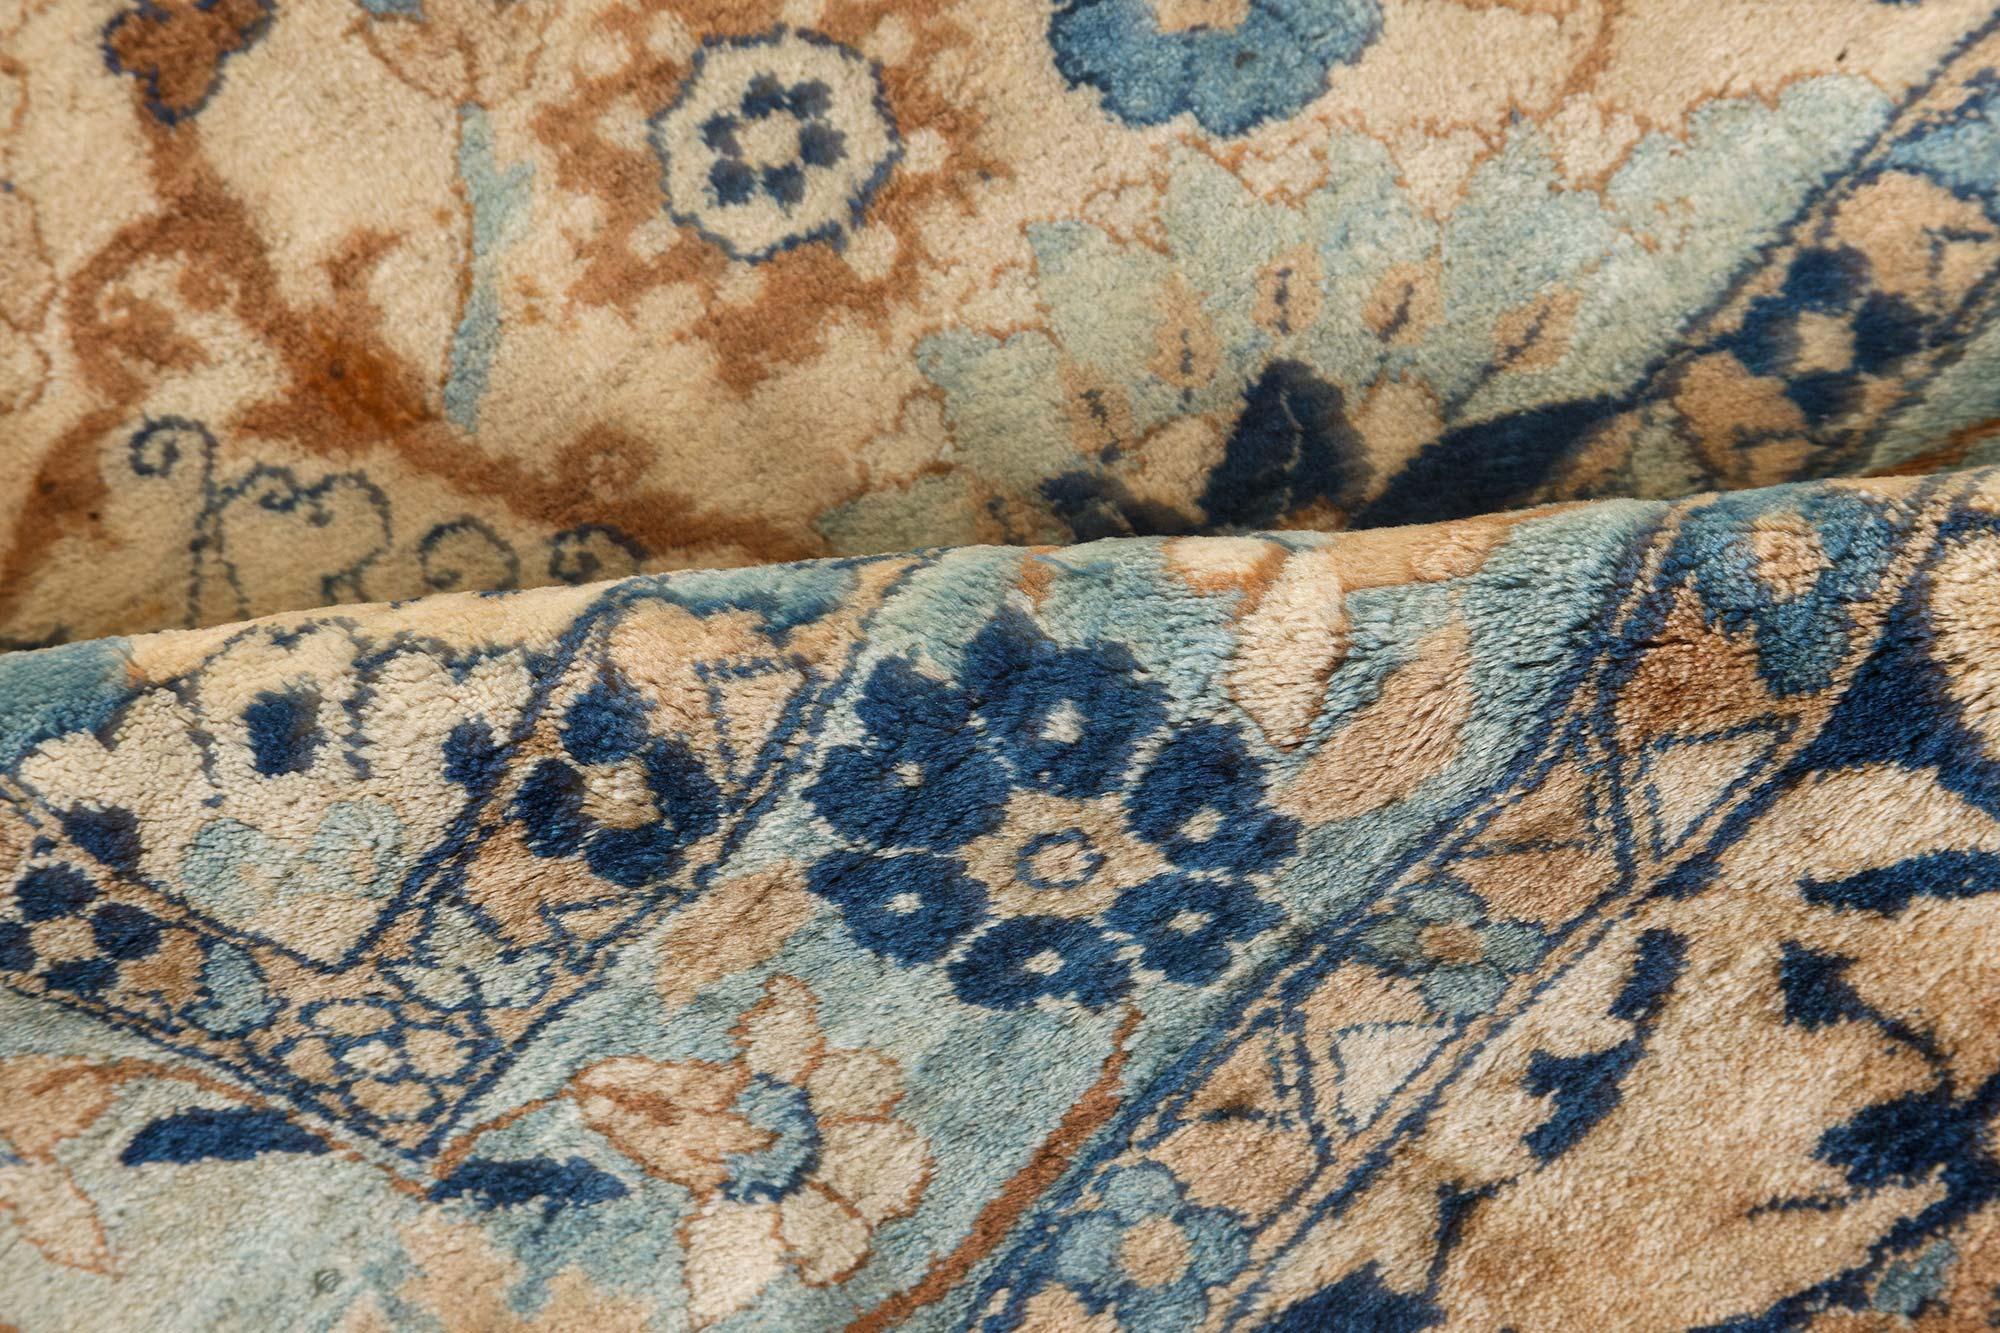 Antique Persian Kirman handmade wool carpet
Size: 11'8